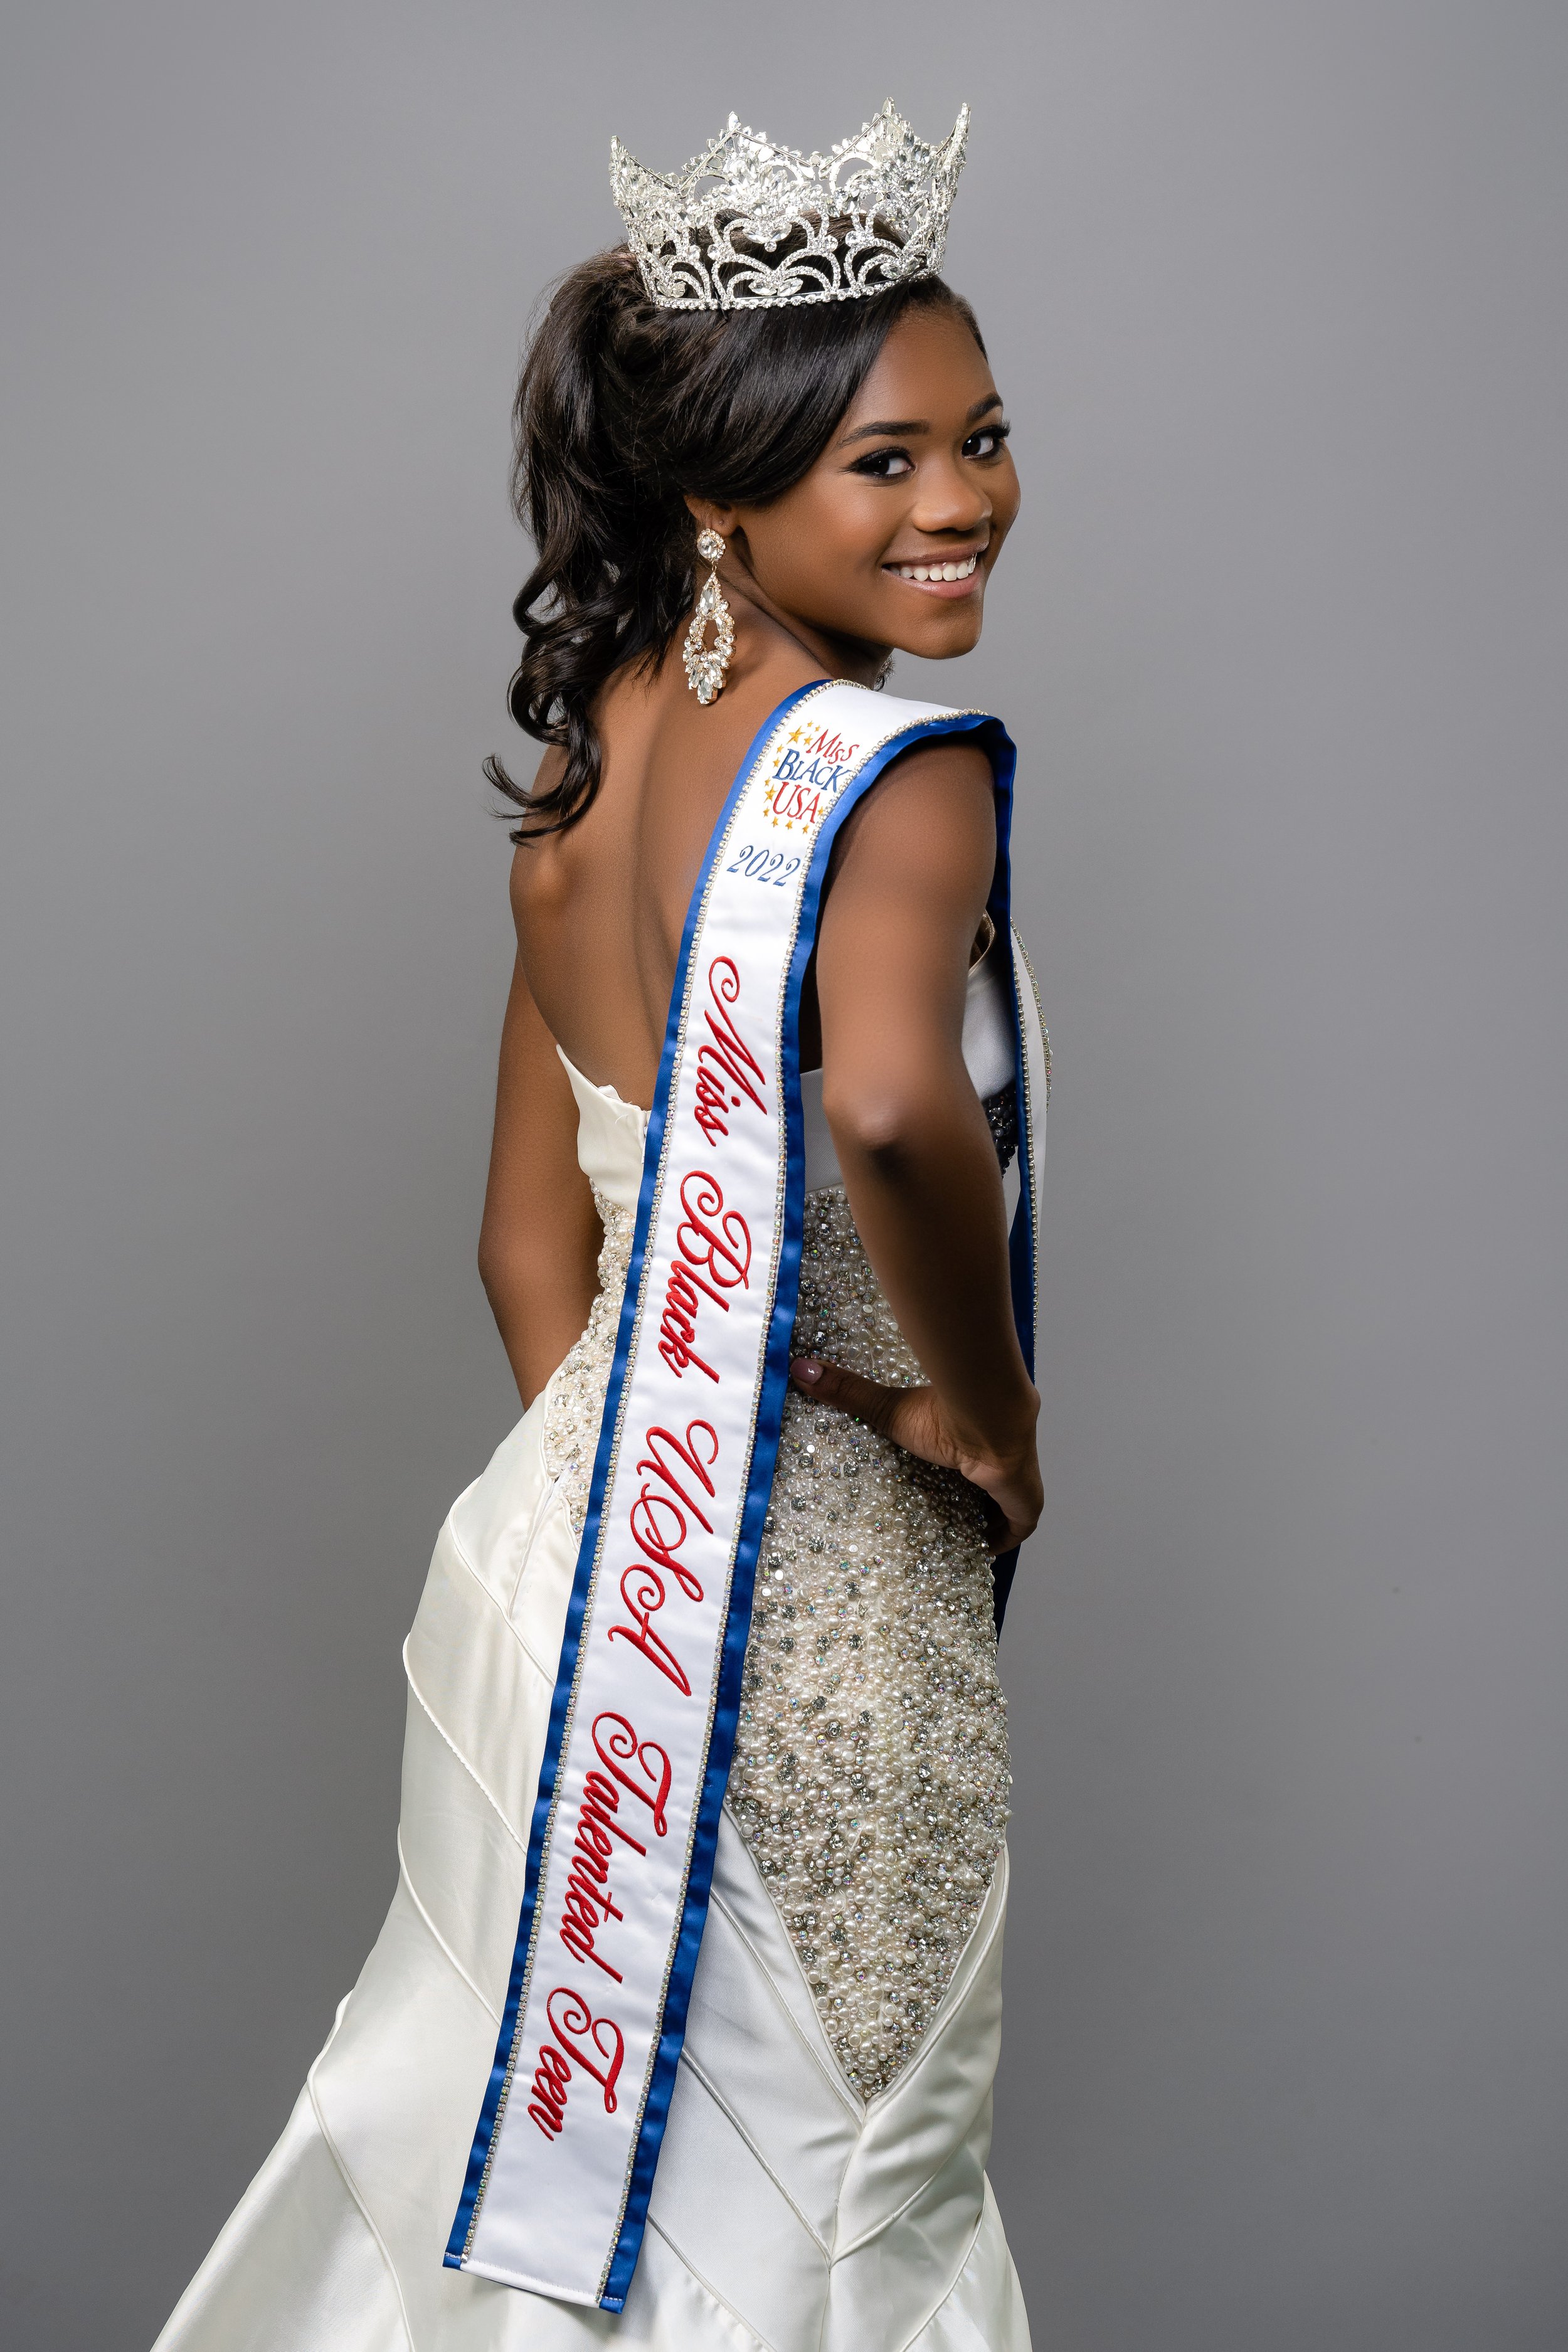 Meet Delaware's new Miss Black USA Talented Teen, Angelina Aubain